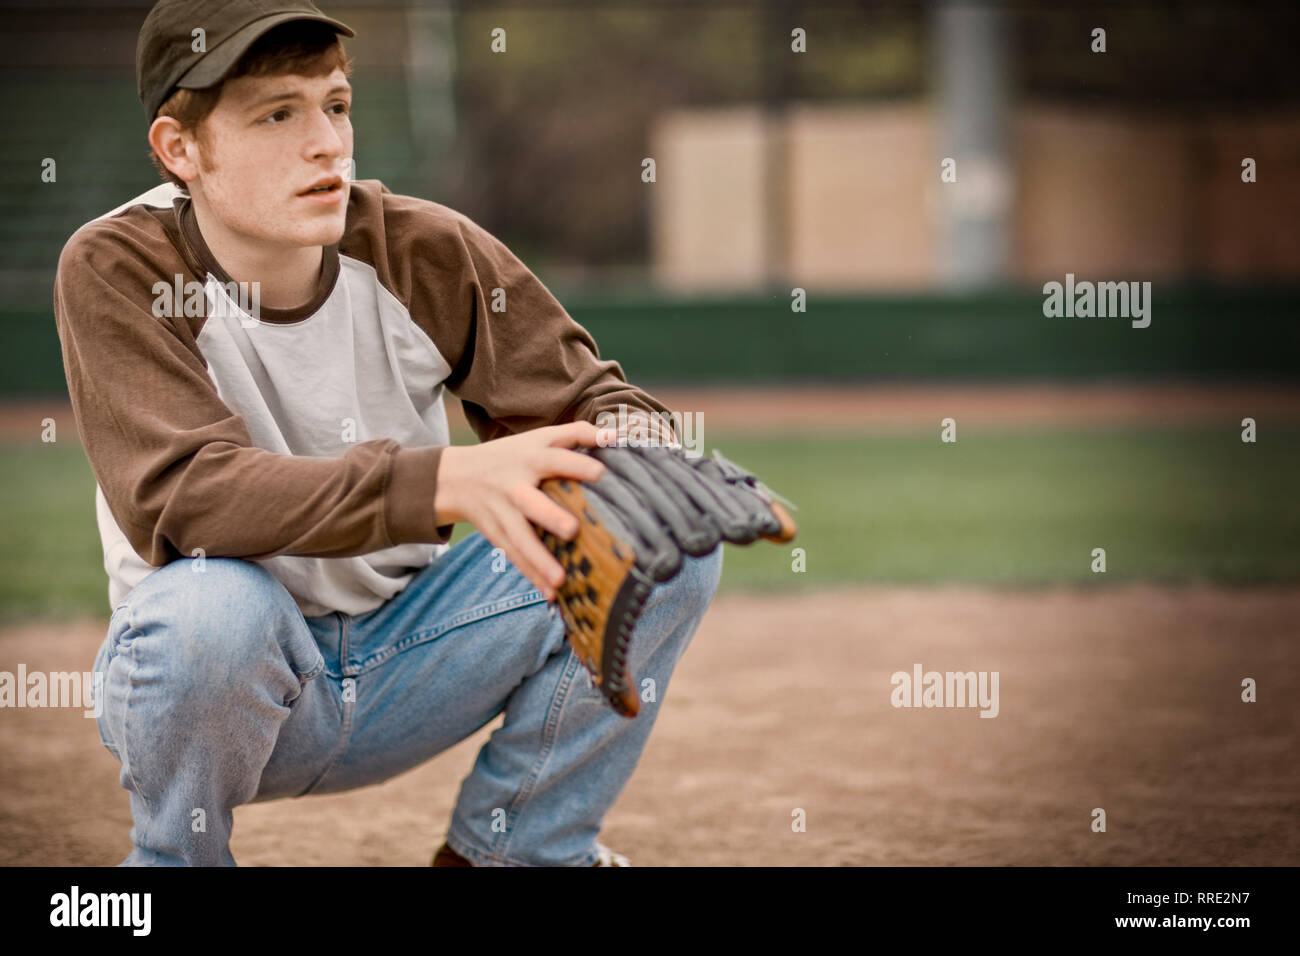 Teenage boy crouching with a baseball mitt on a sports field. Stock Photo